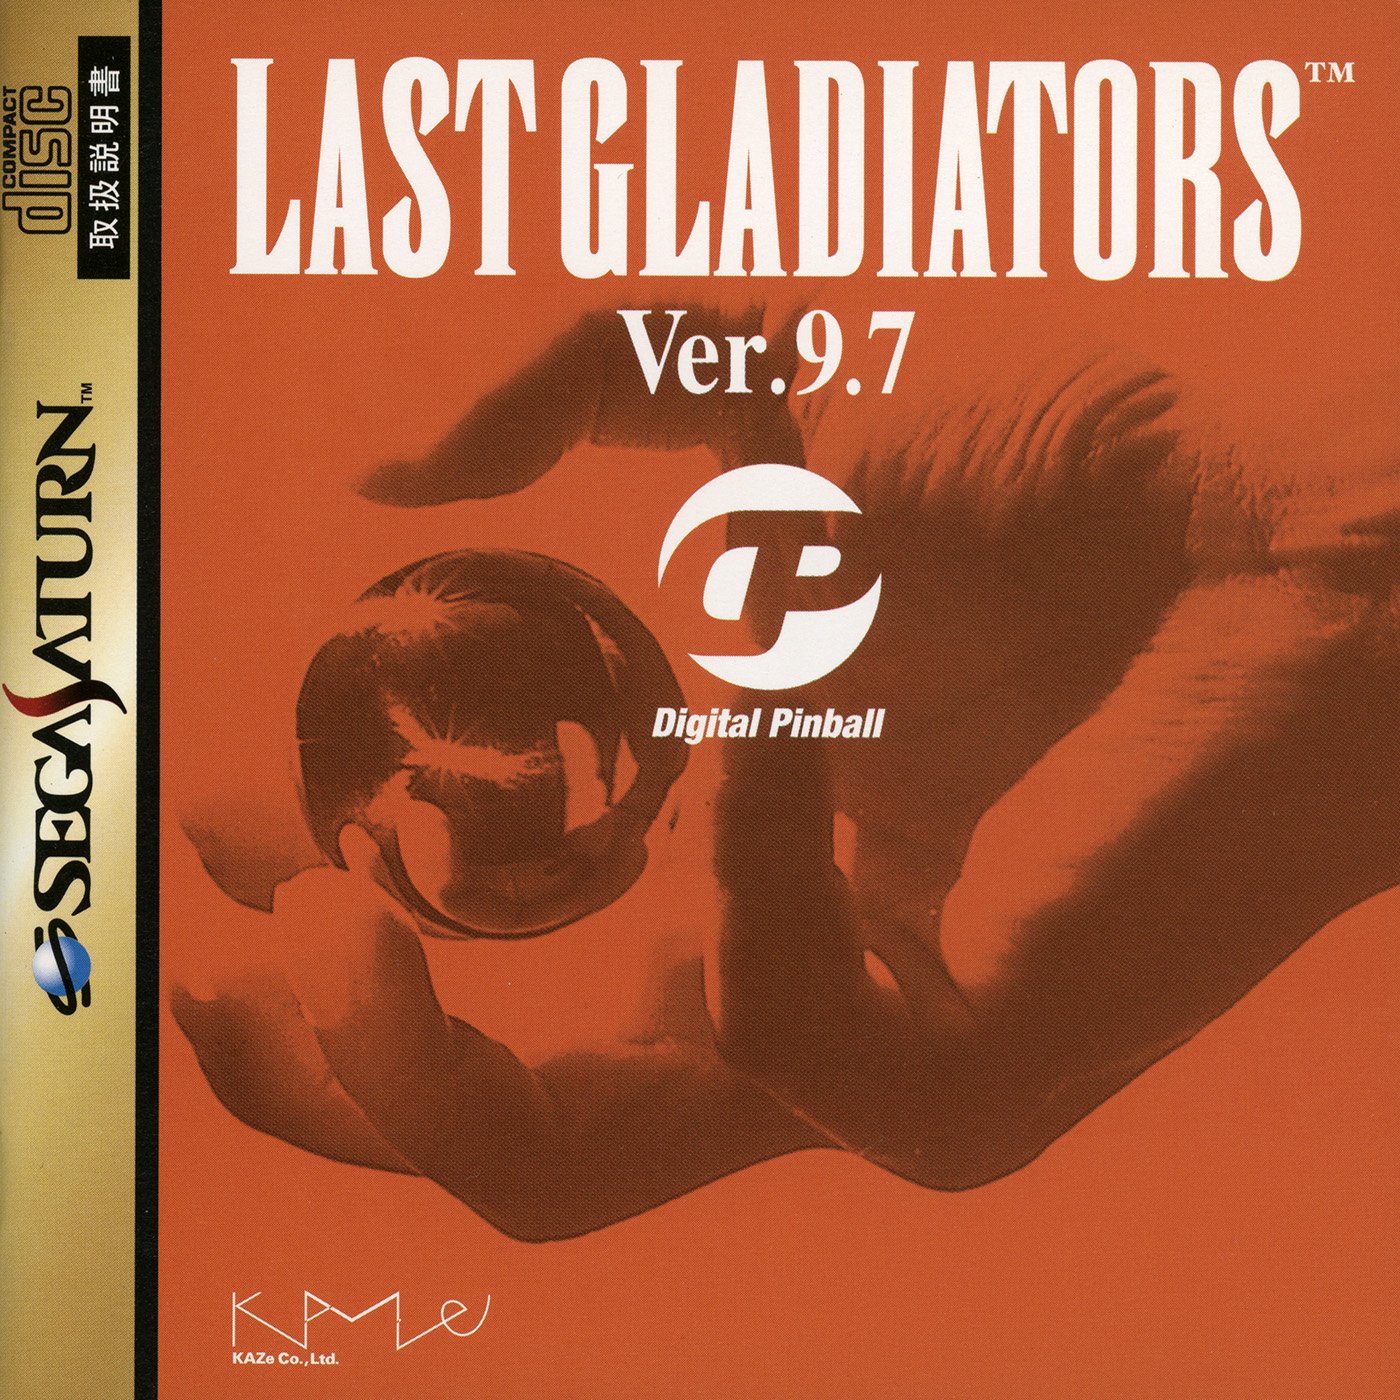 Digital Pinball: Last Gladiators Ver.9.7